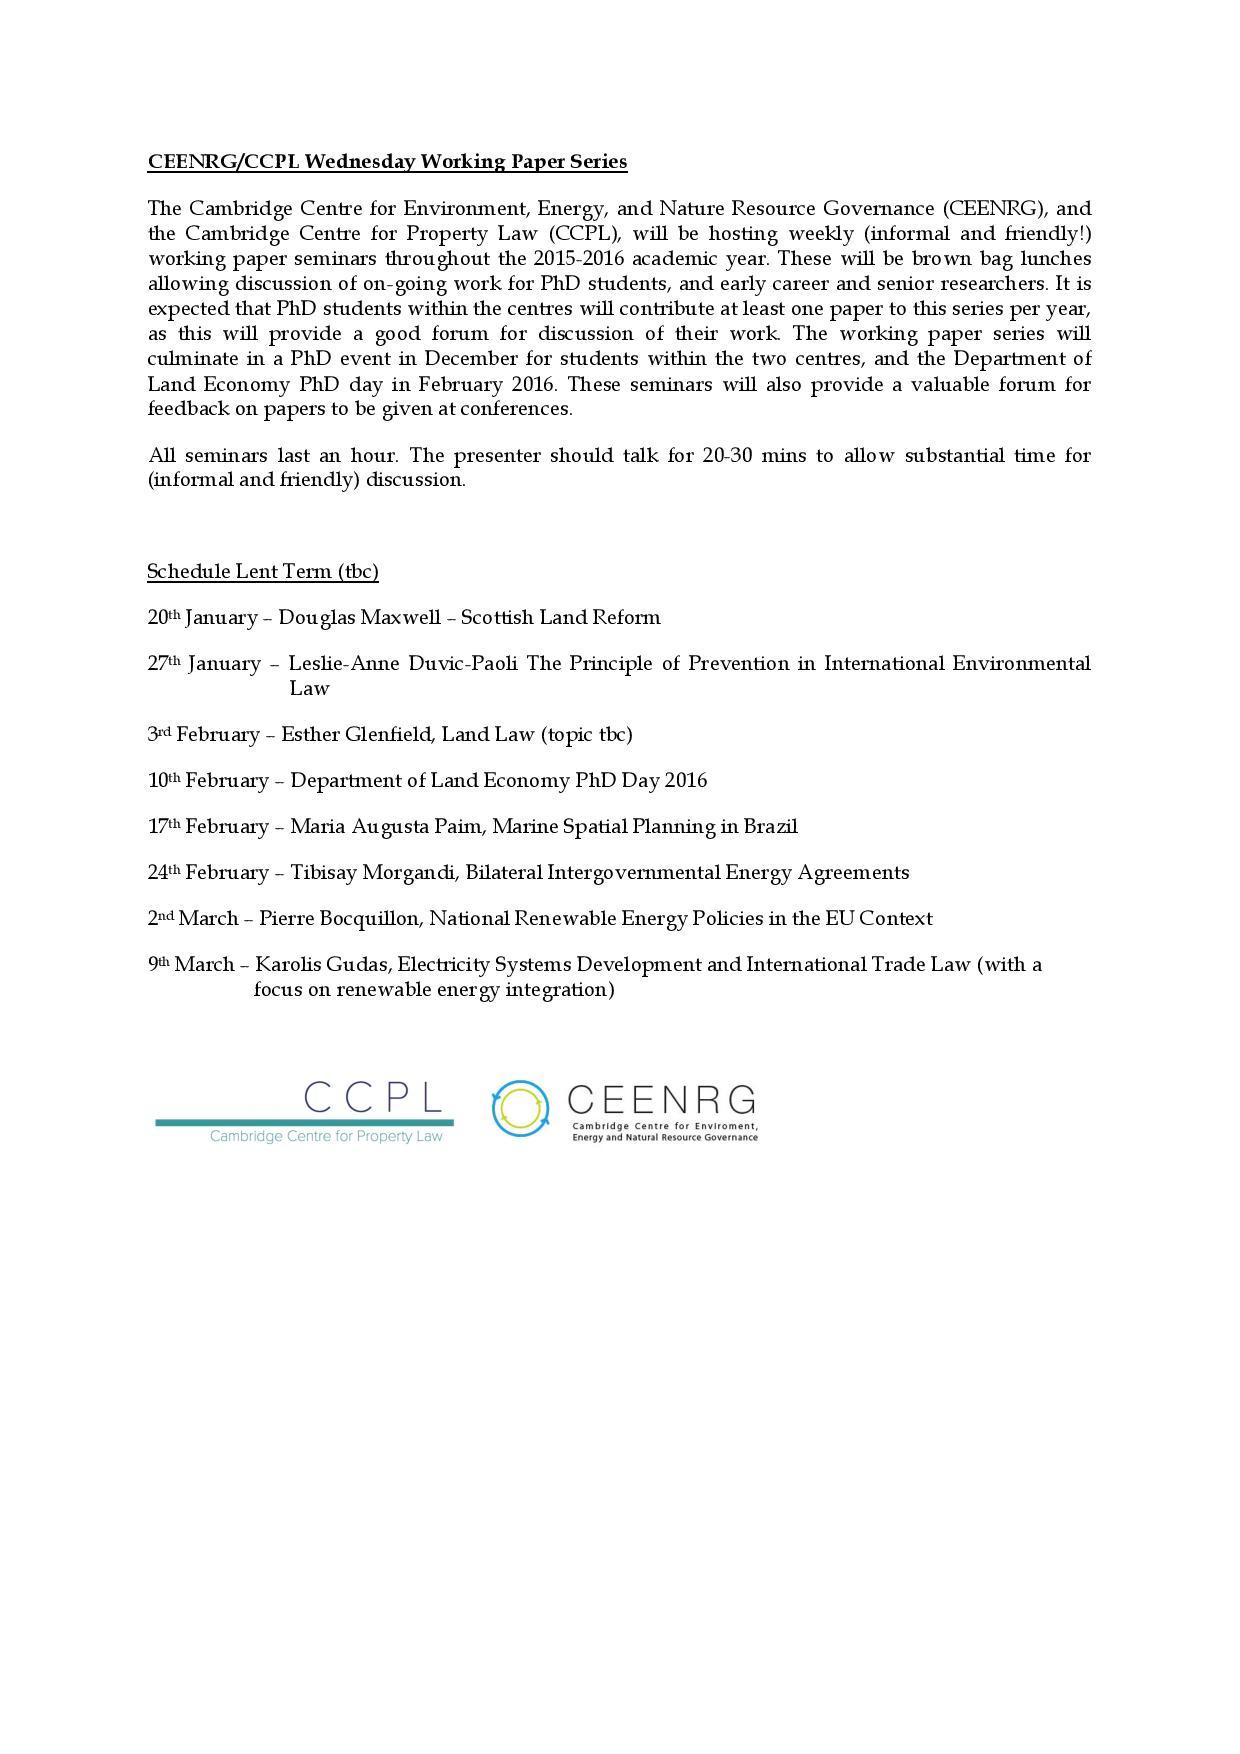 CEENRG/CCPL Seminar Series (2016 Lent Term)